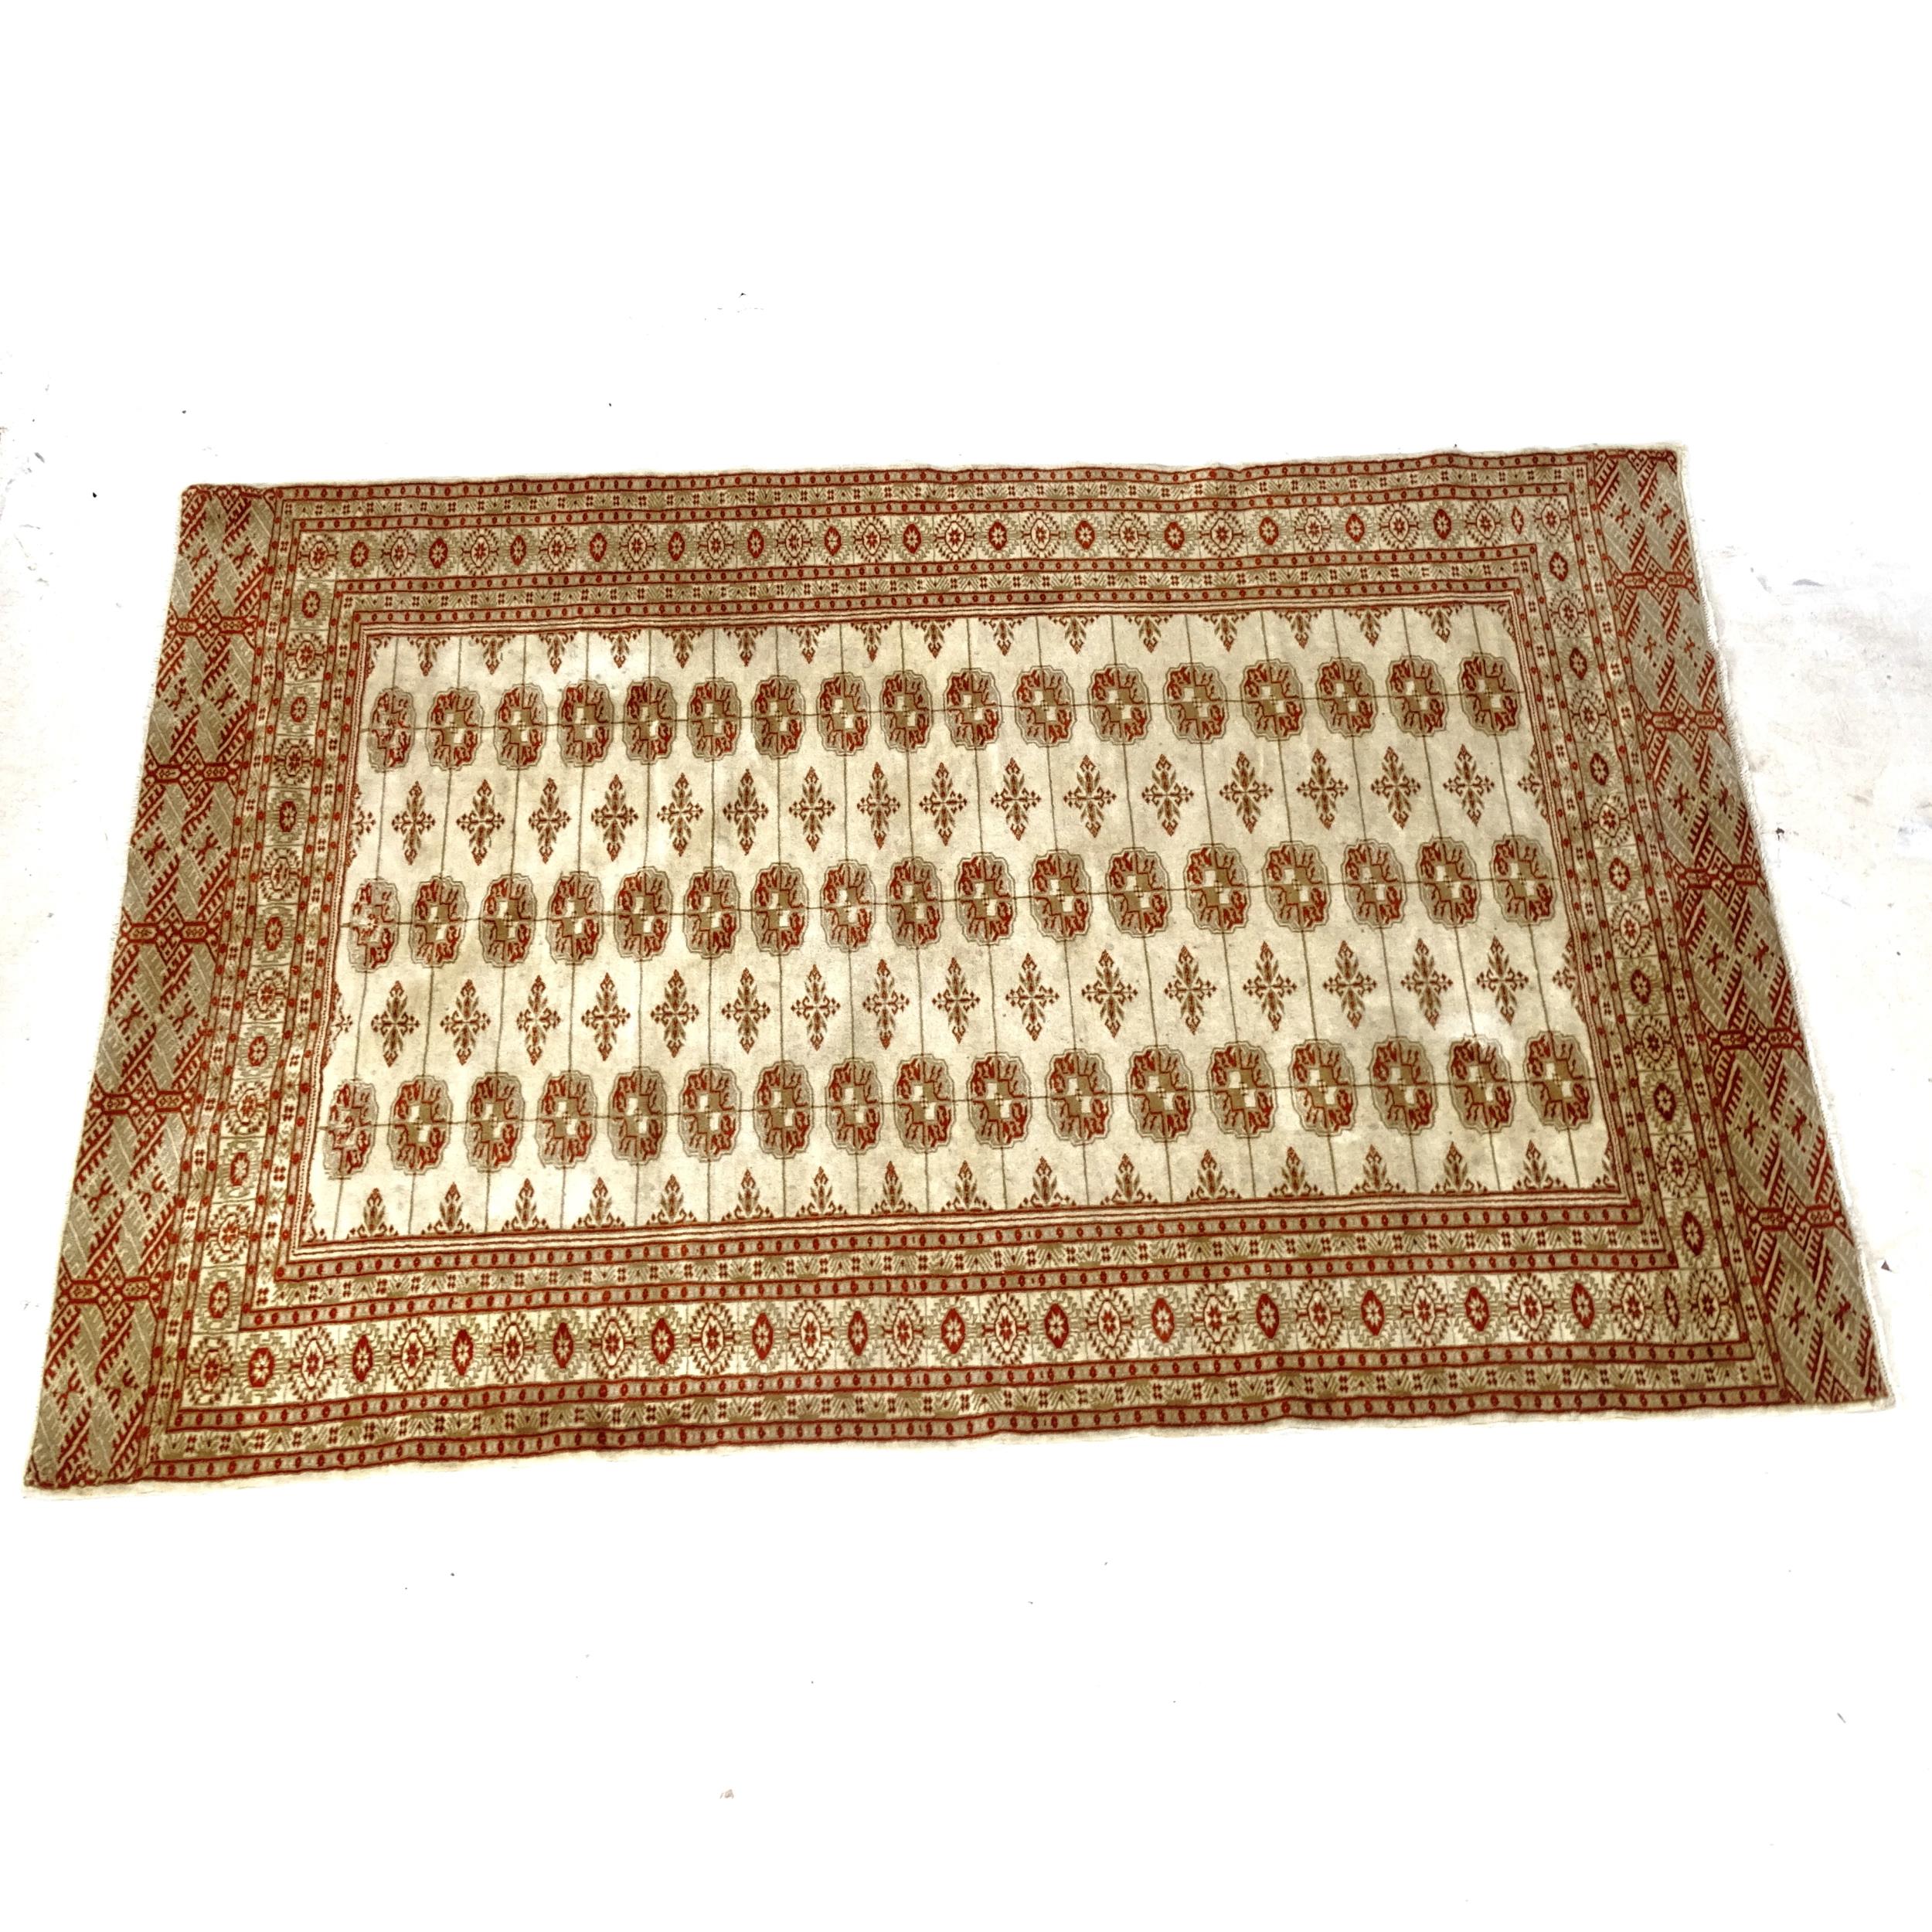 A cream ground wool Tekke design rug, 195cm x 130cm